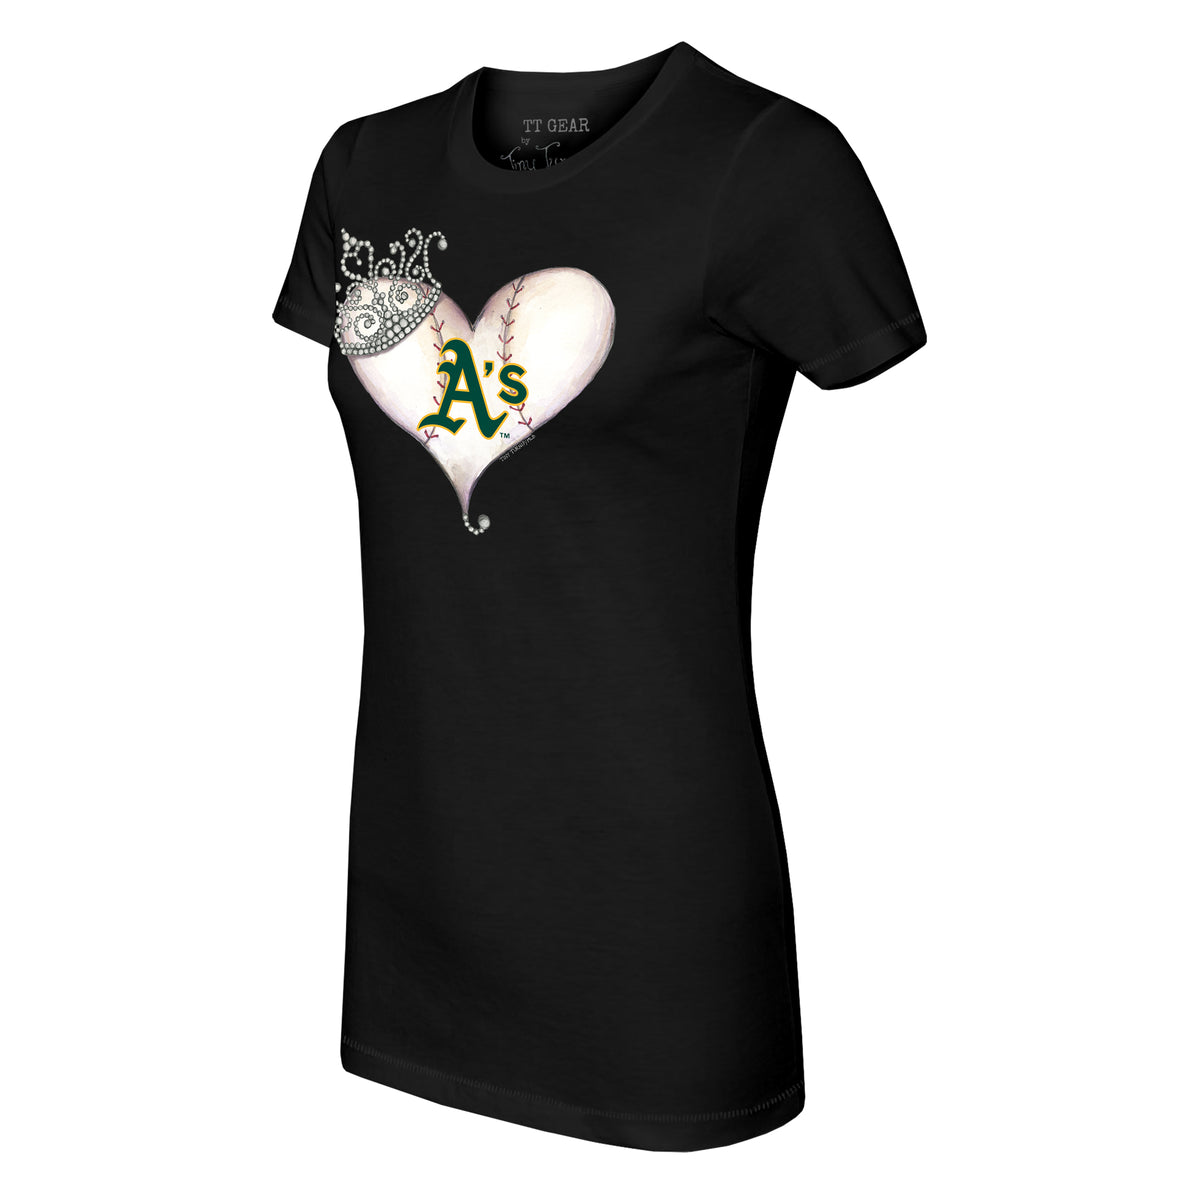 Oakland Athletics Tiara Heart Tee Shirt